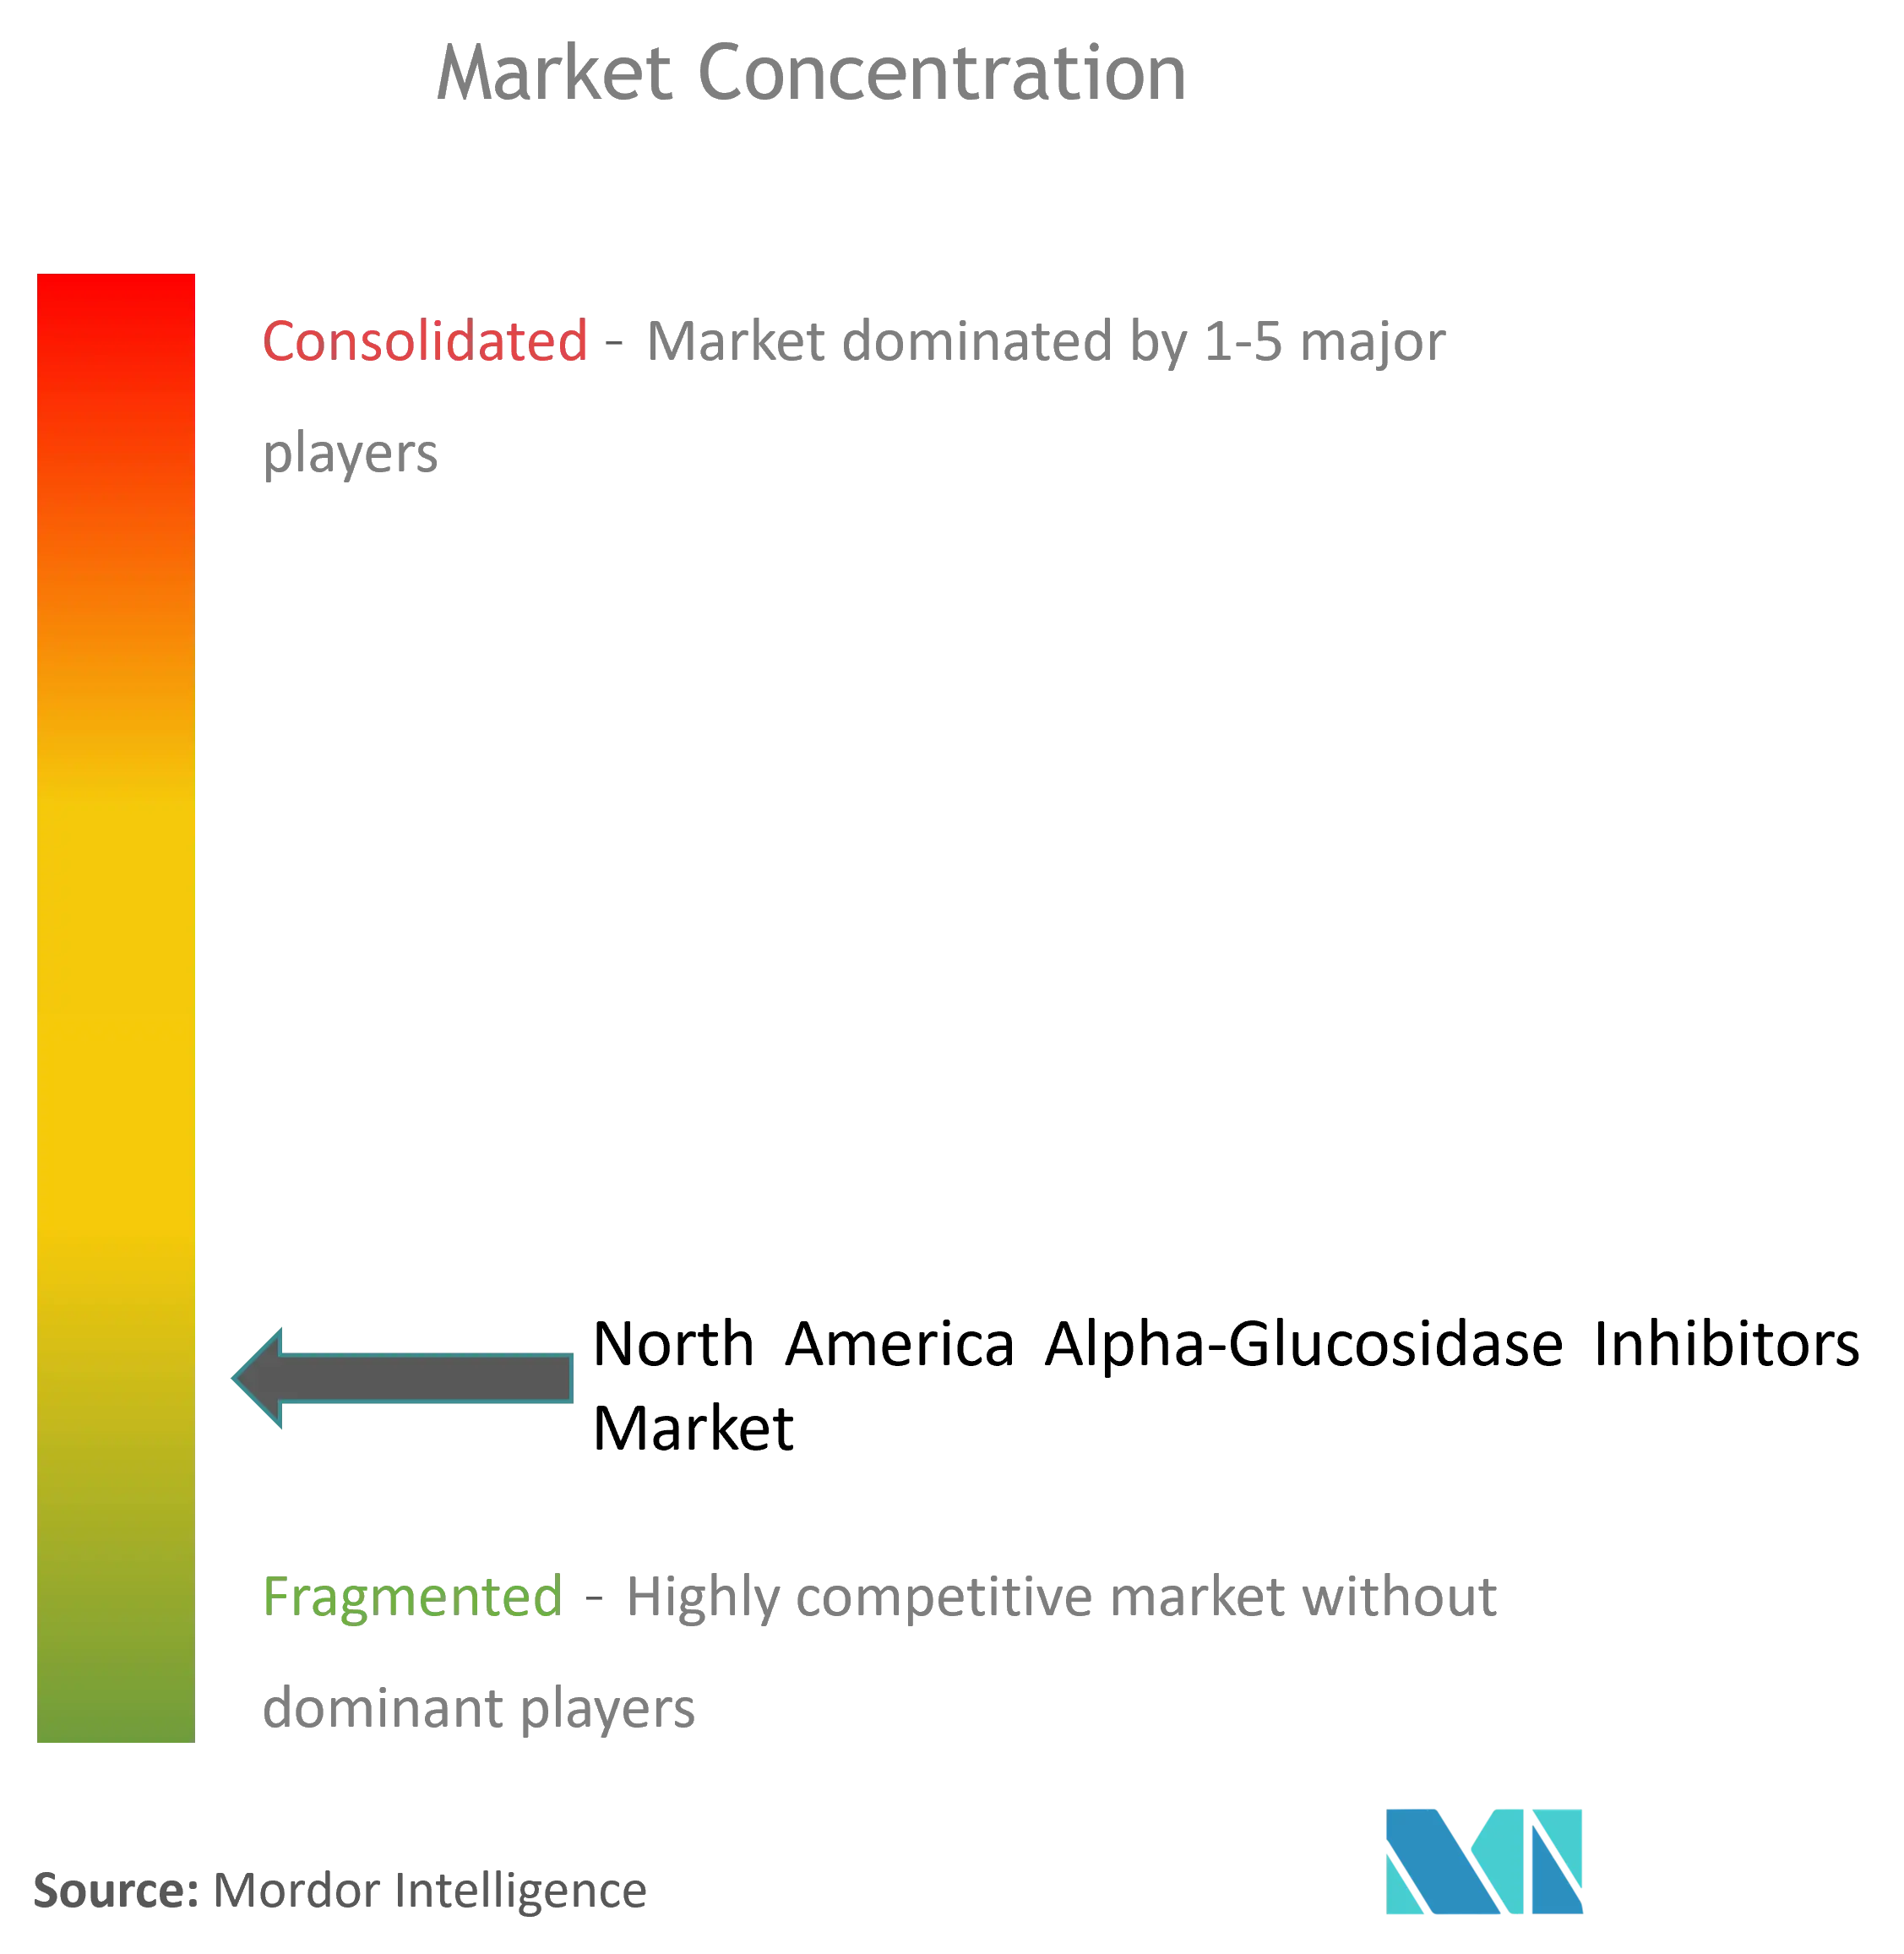 North America Alpha-Glucosidase Inhibitors Market Concentration